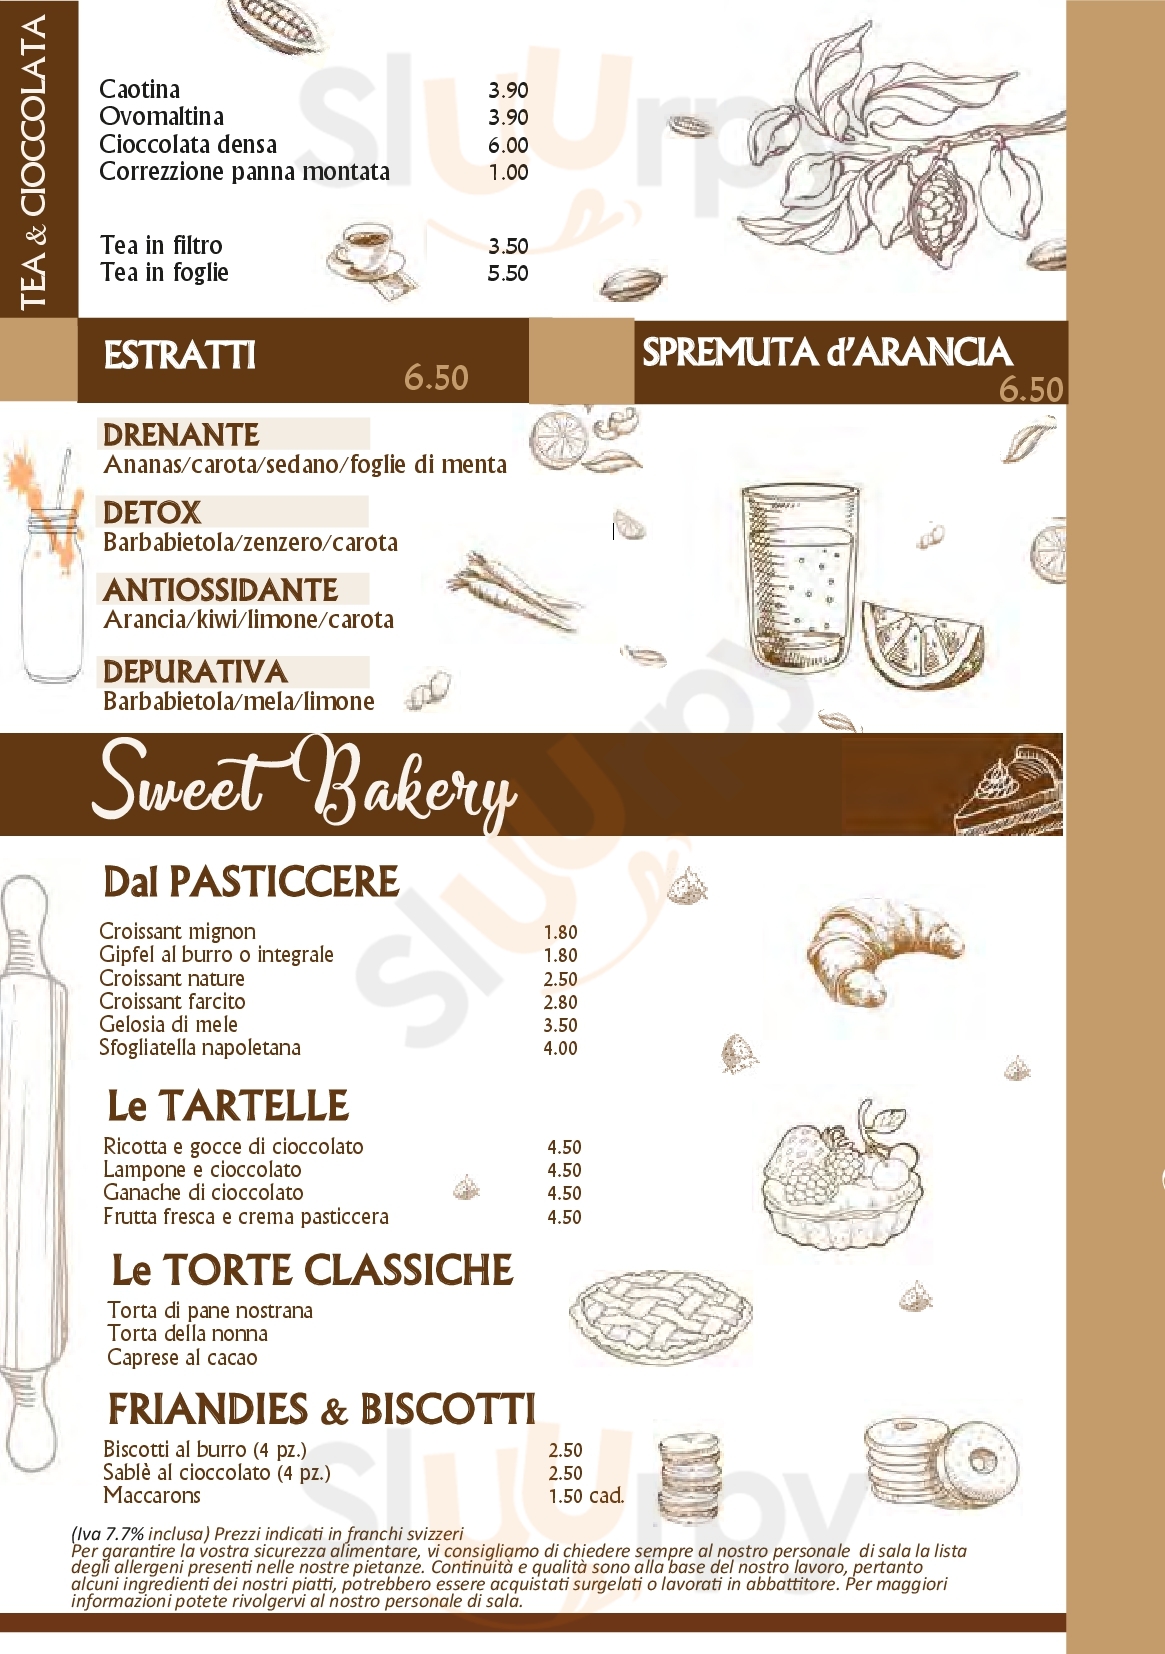 Latte Macchiato Bakery & Caffè Lugano Menu - 1